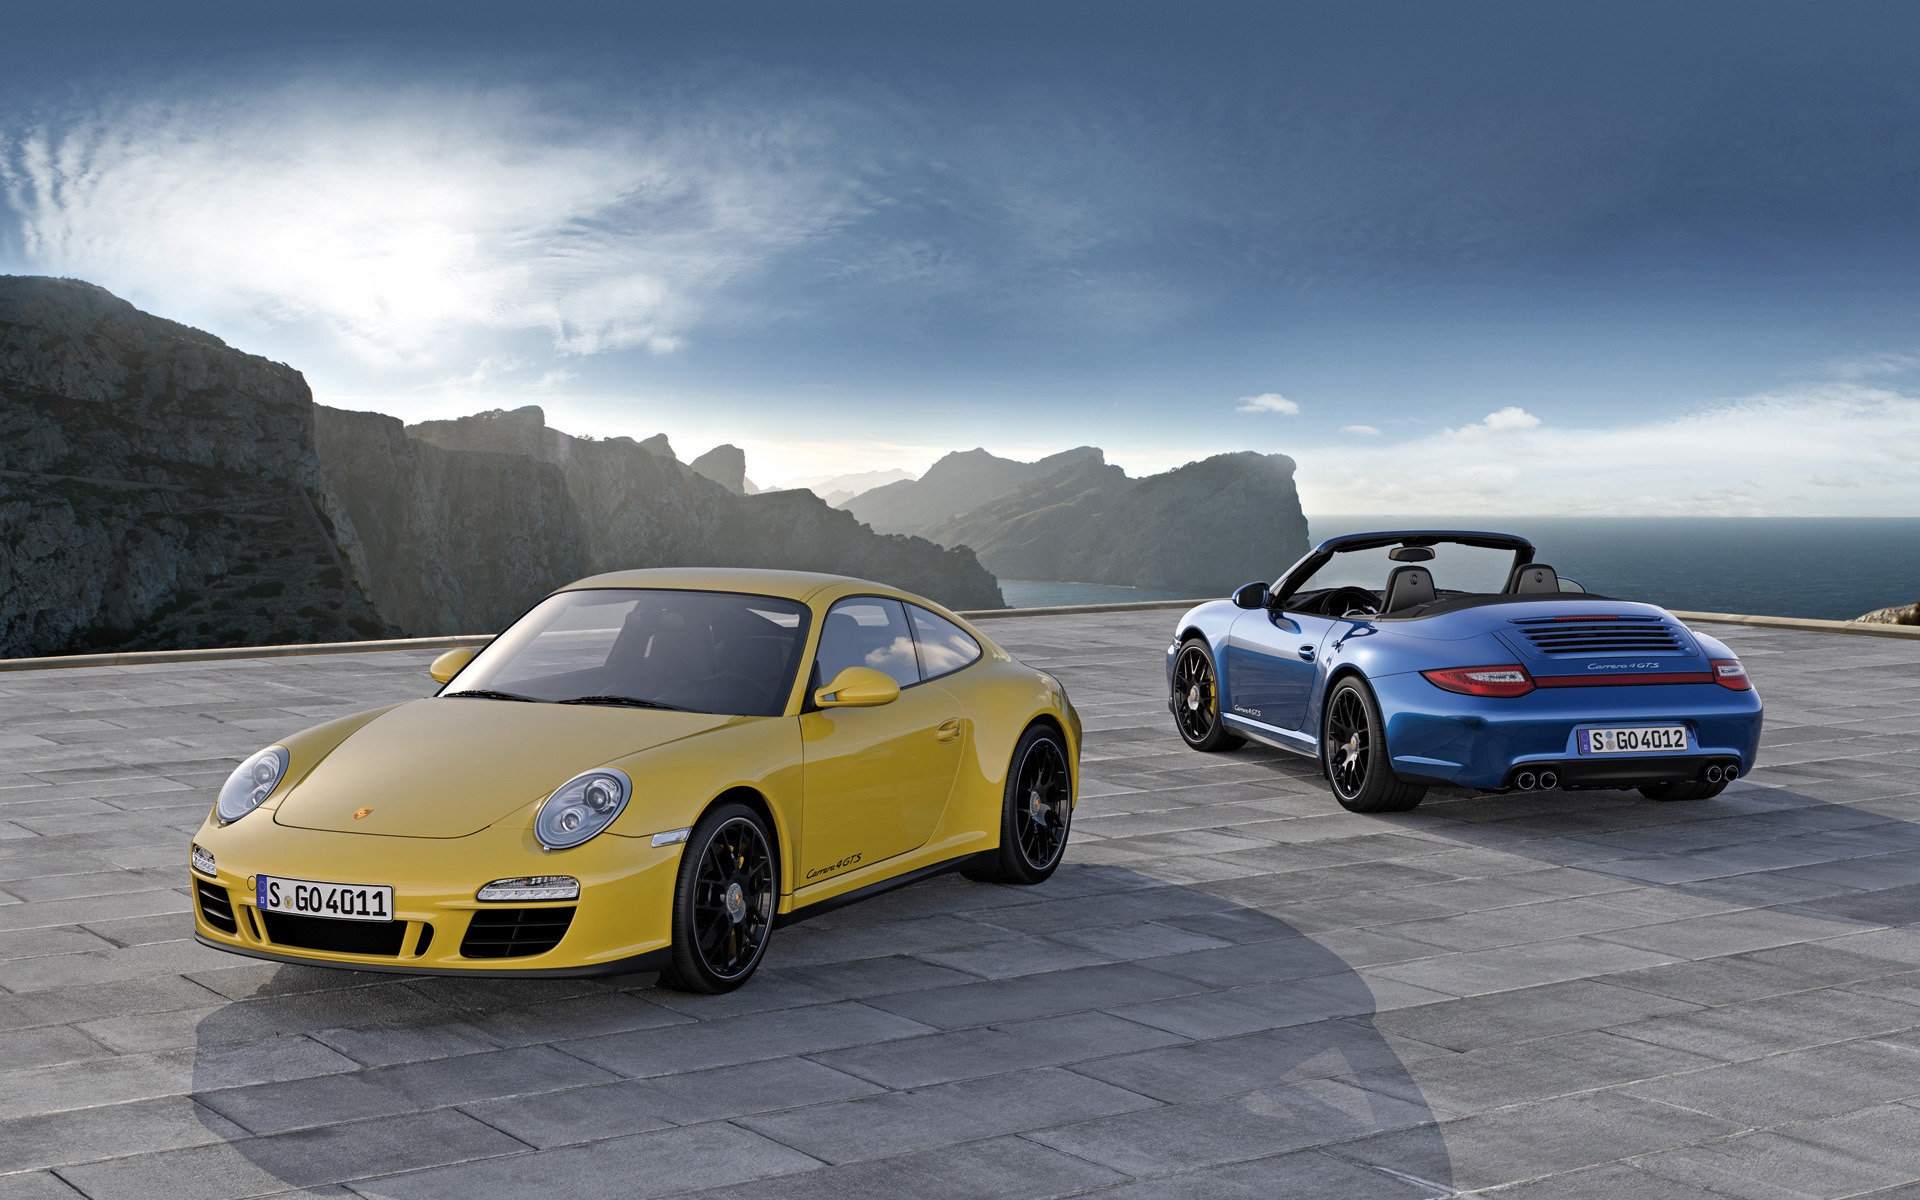 Porsche 911 Carrera 4 GTS Duo for 1920 x 1200 widescreen resolution